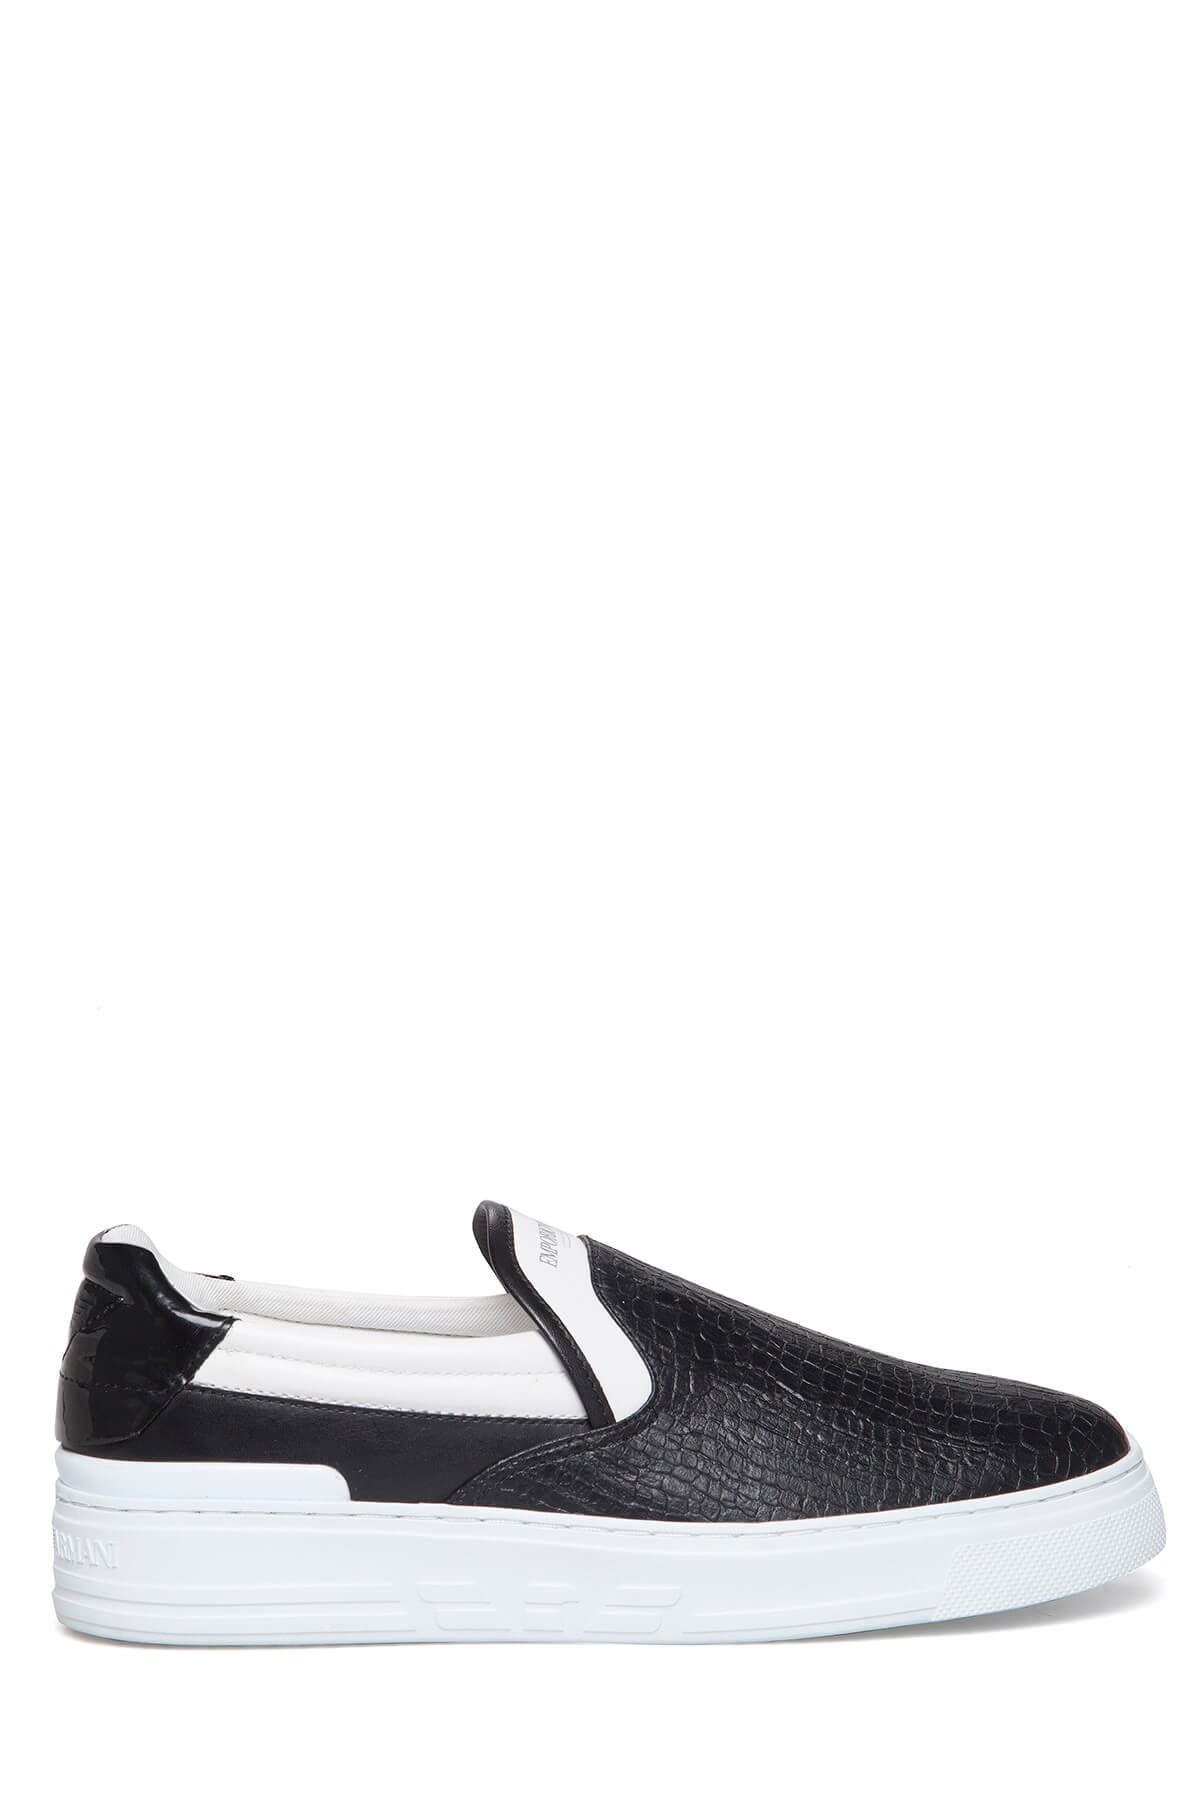 Emporio Armani Siyah Erkek Ayakkabı X4X222 Xl190 D850